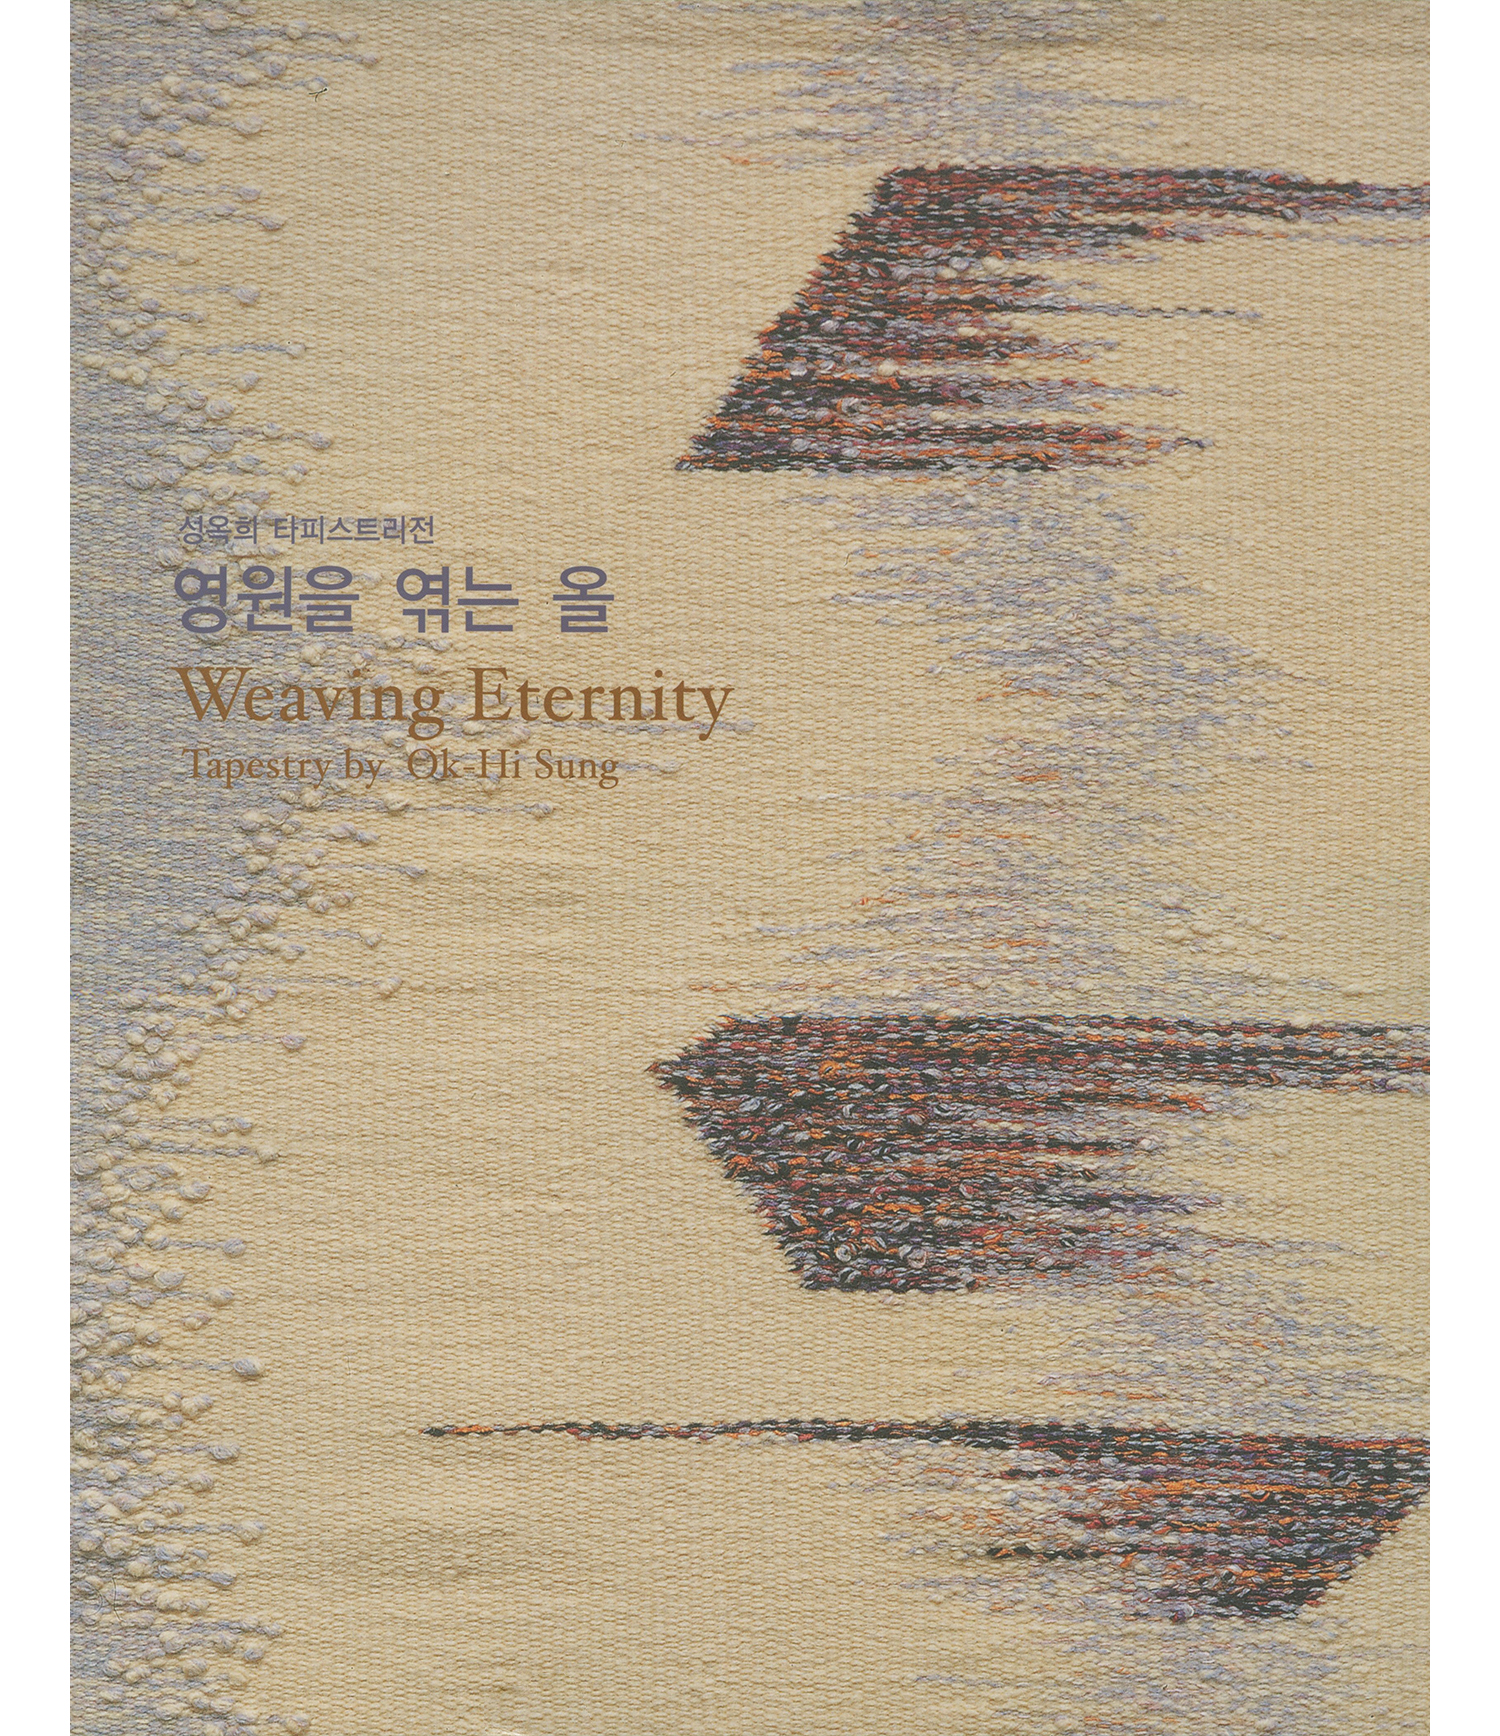 Weaving Eternity: Tapestry by Ok-hi sung